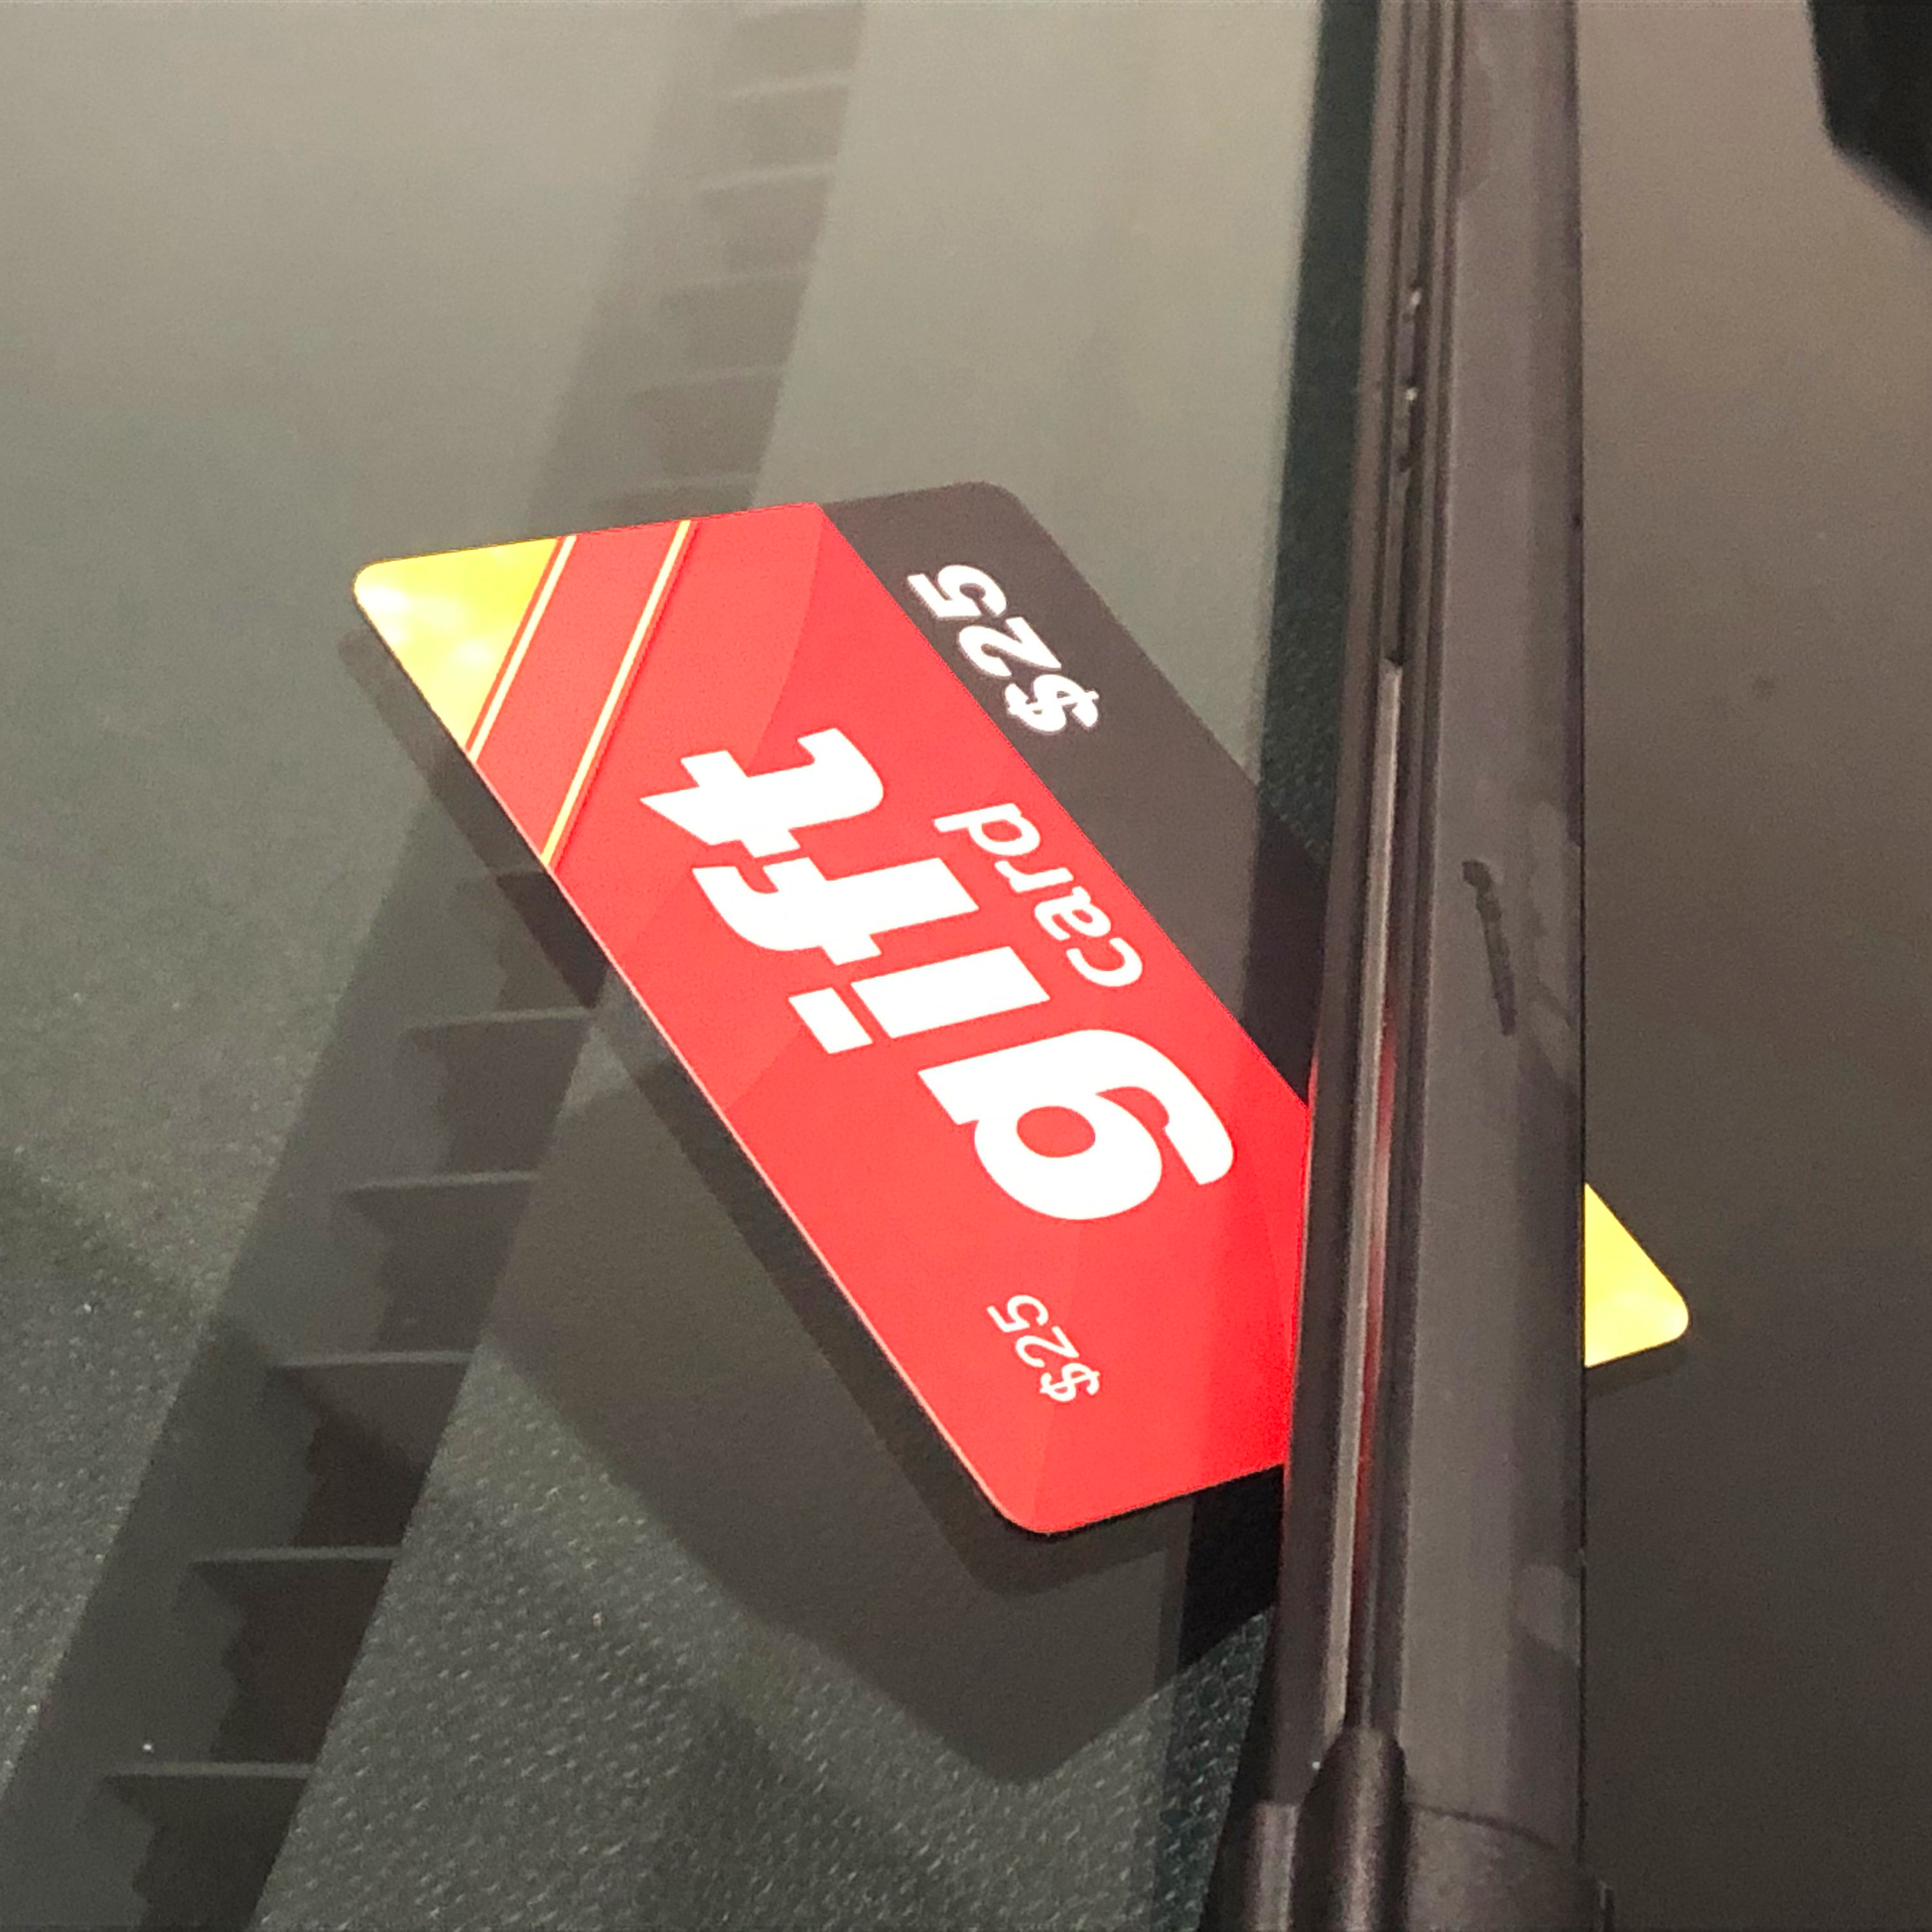 Asshole Bad Parking Prank Cards on Windshield